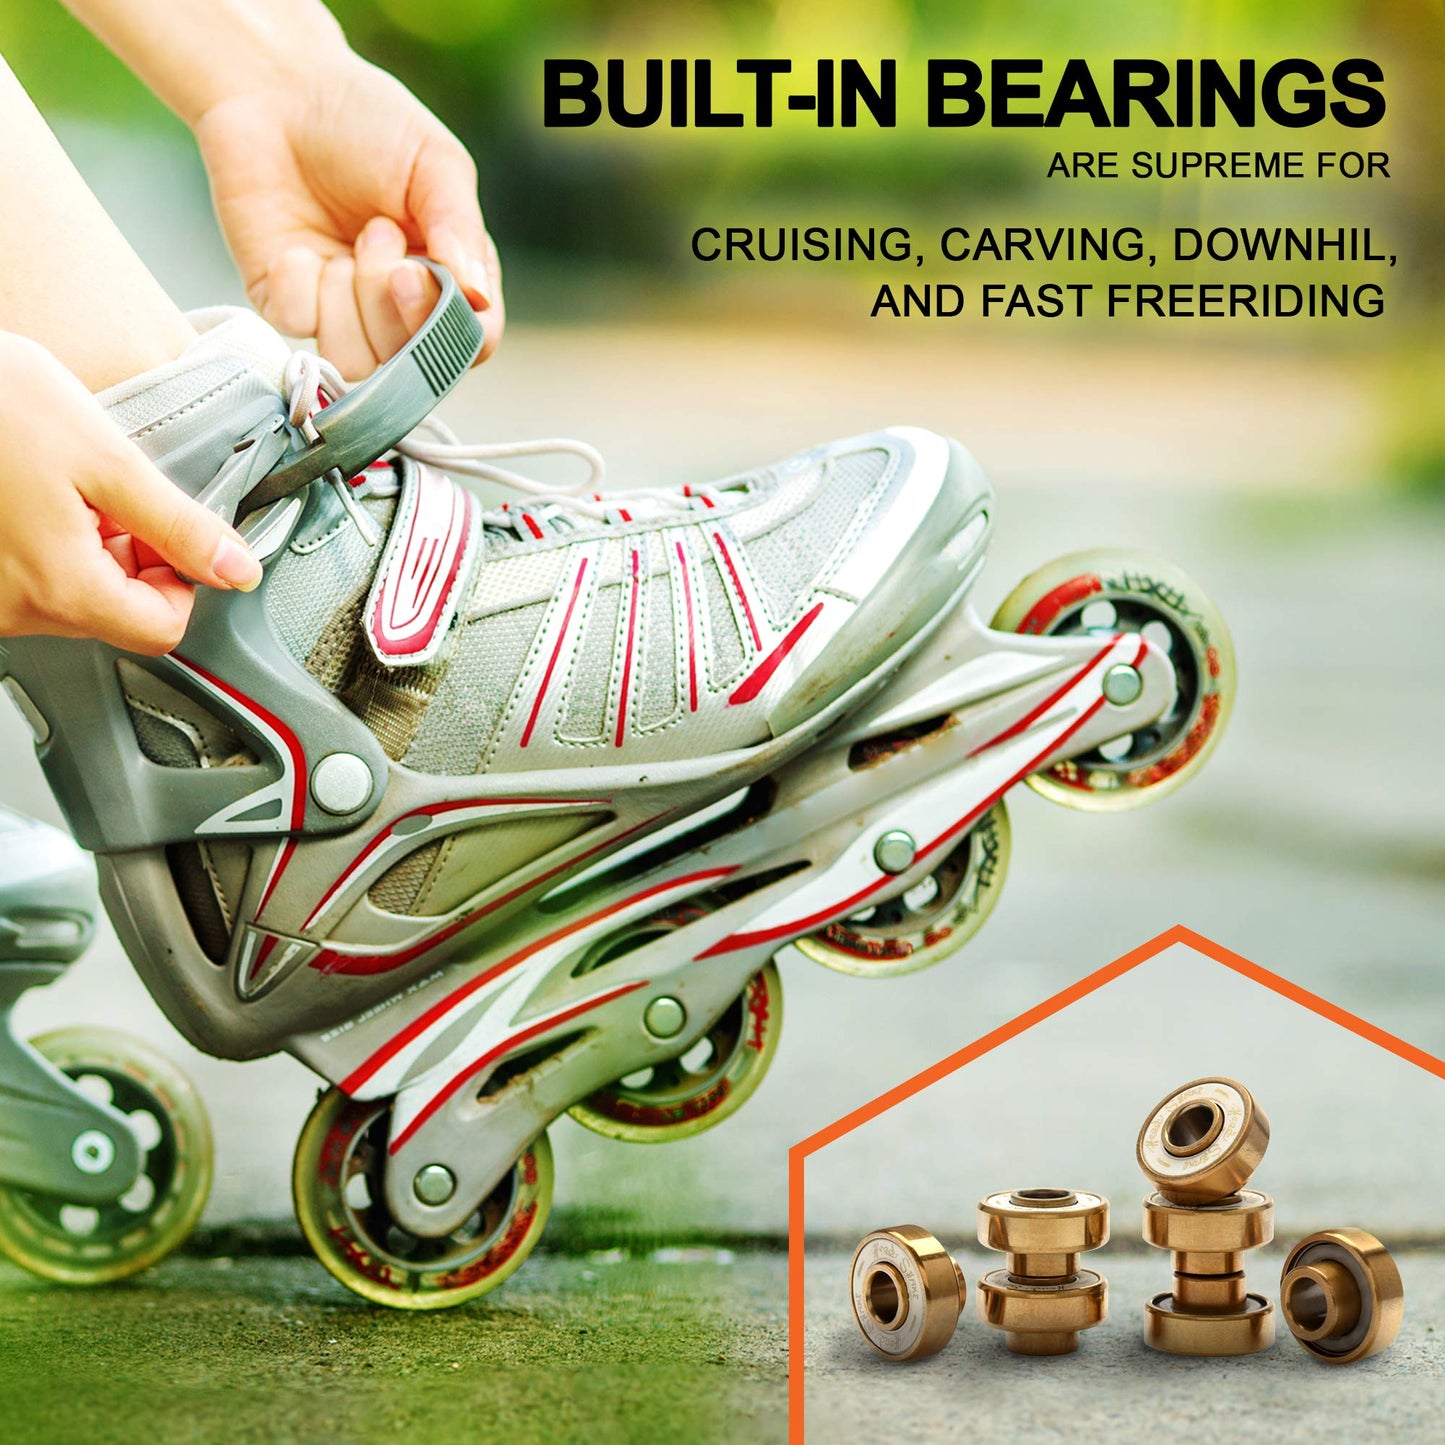 Built-in Bearings